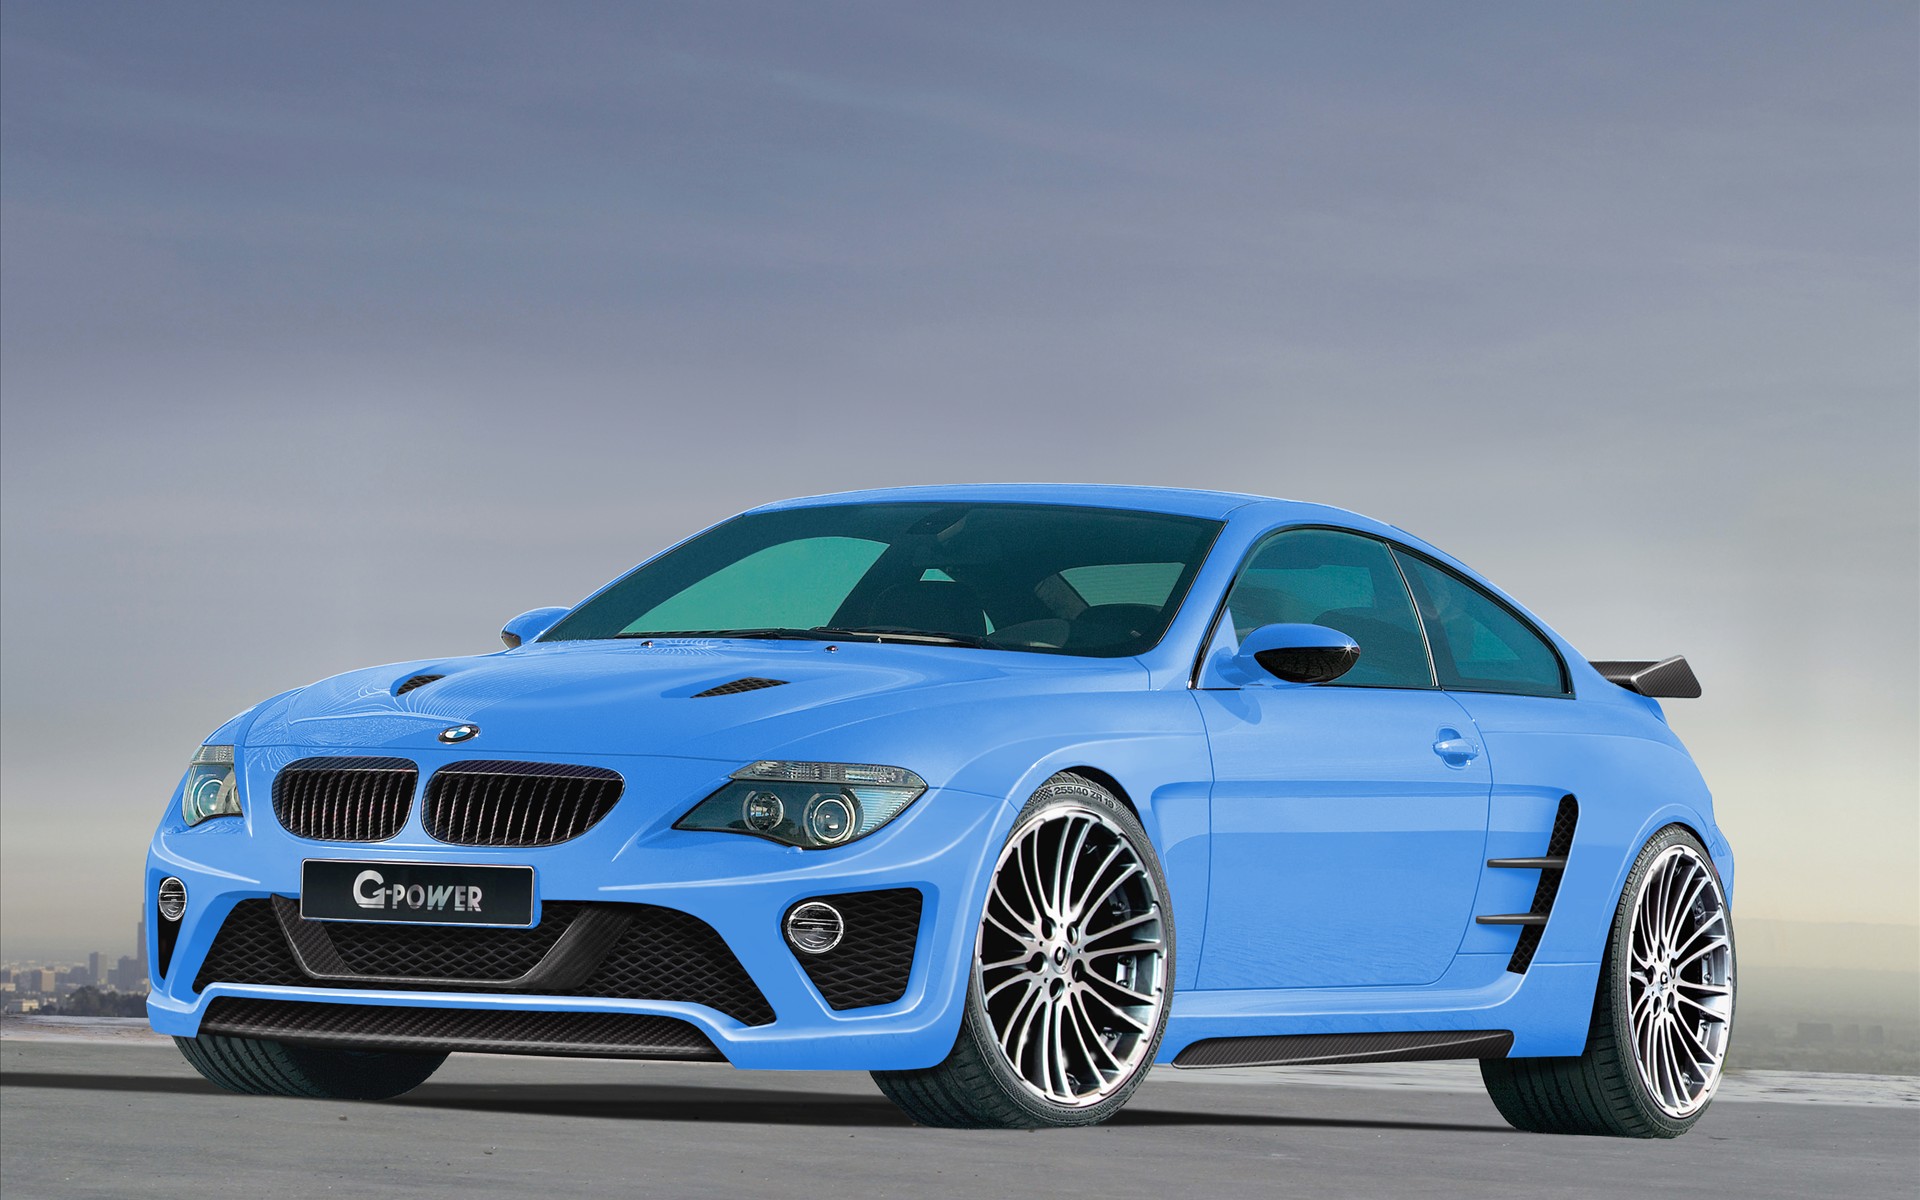 3d обои Голубой БМВ/BMW G-power  бренд # 21038